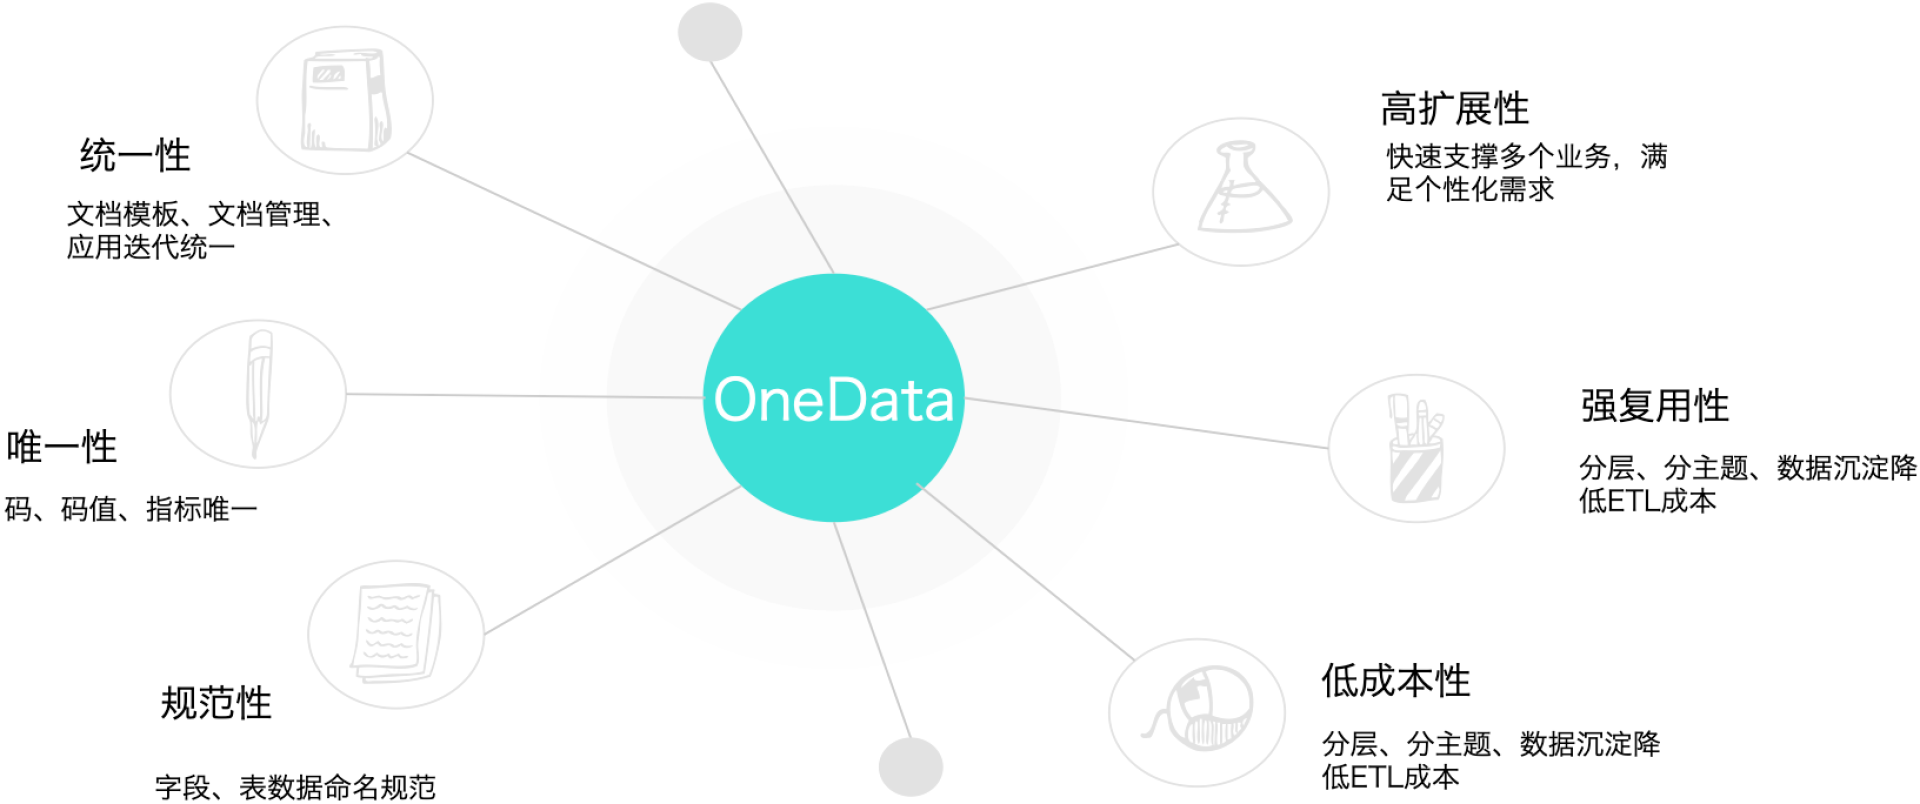 图2 OneData的六个特性